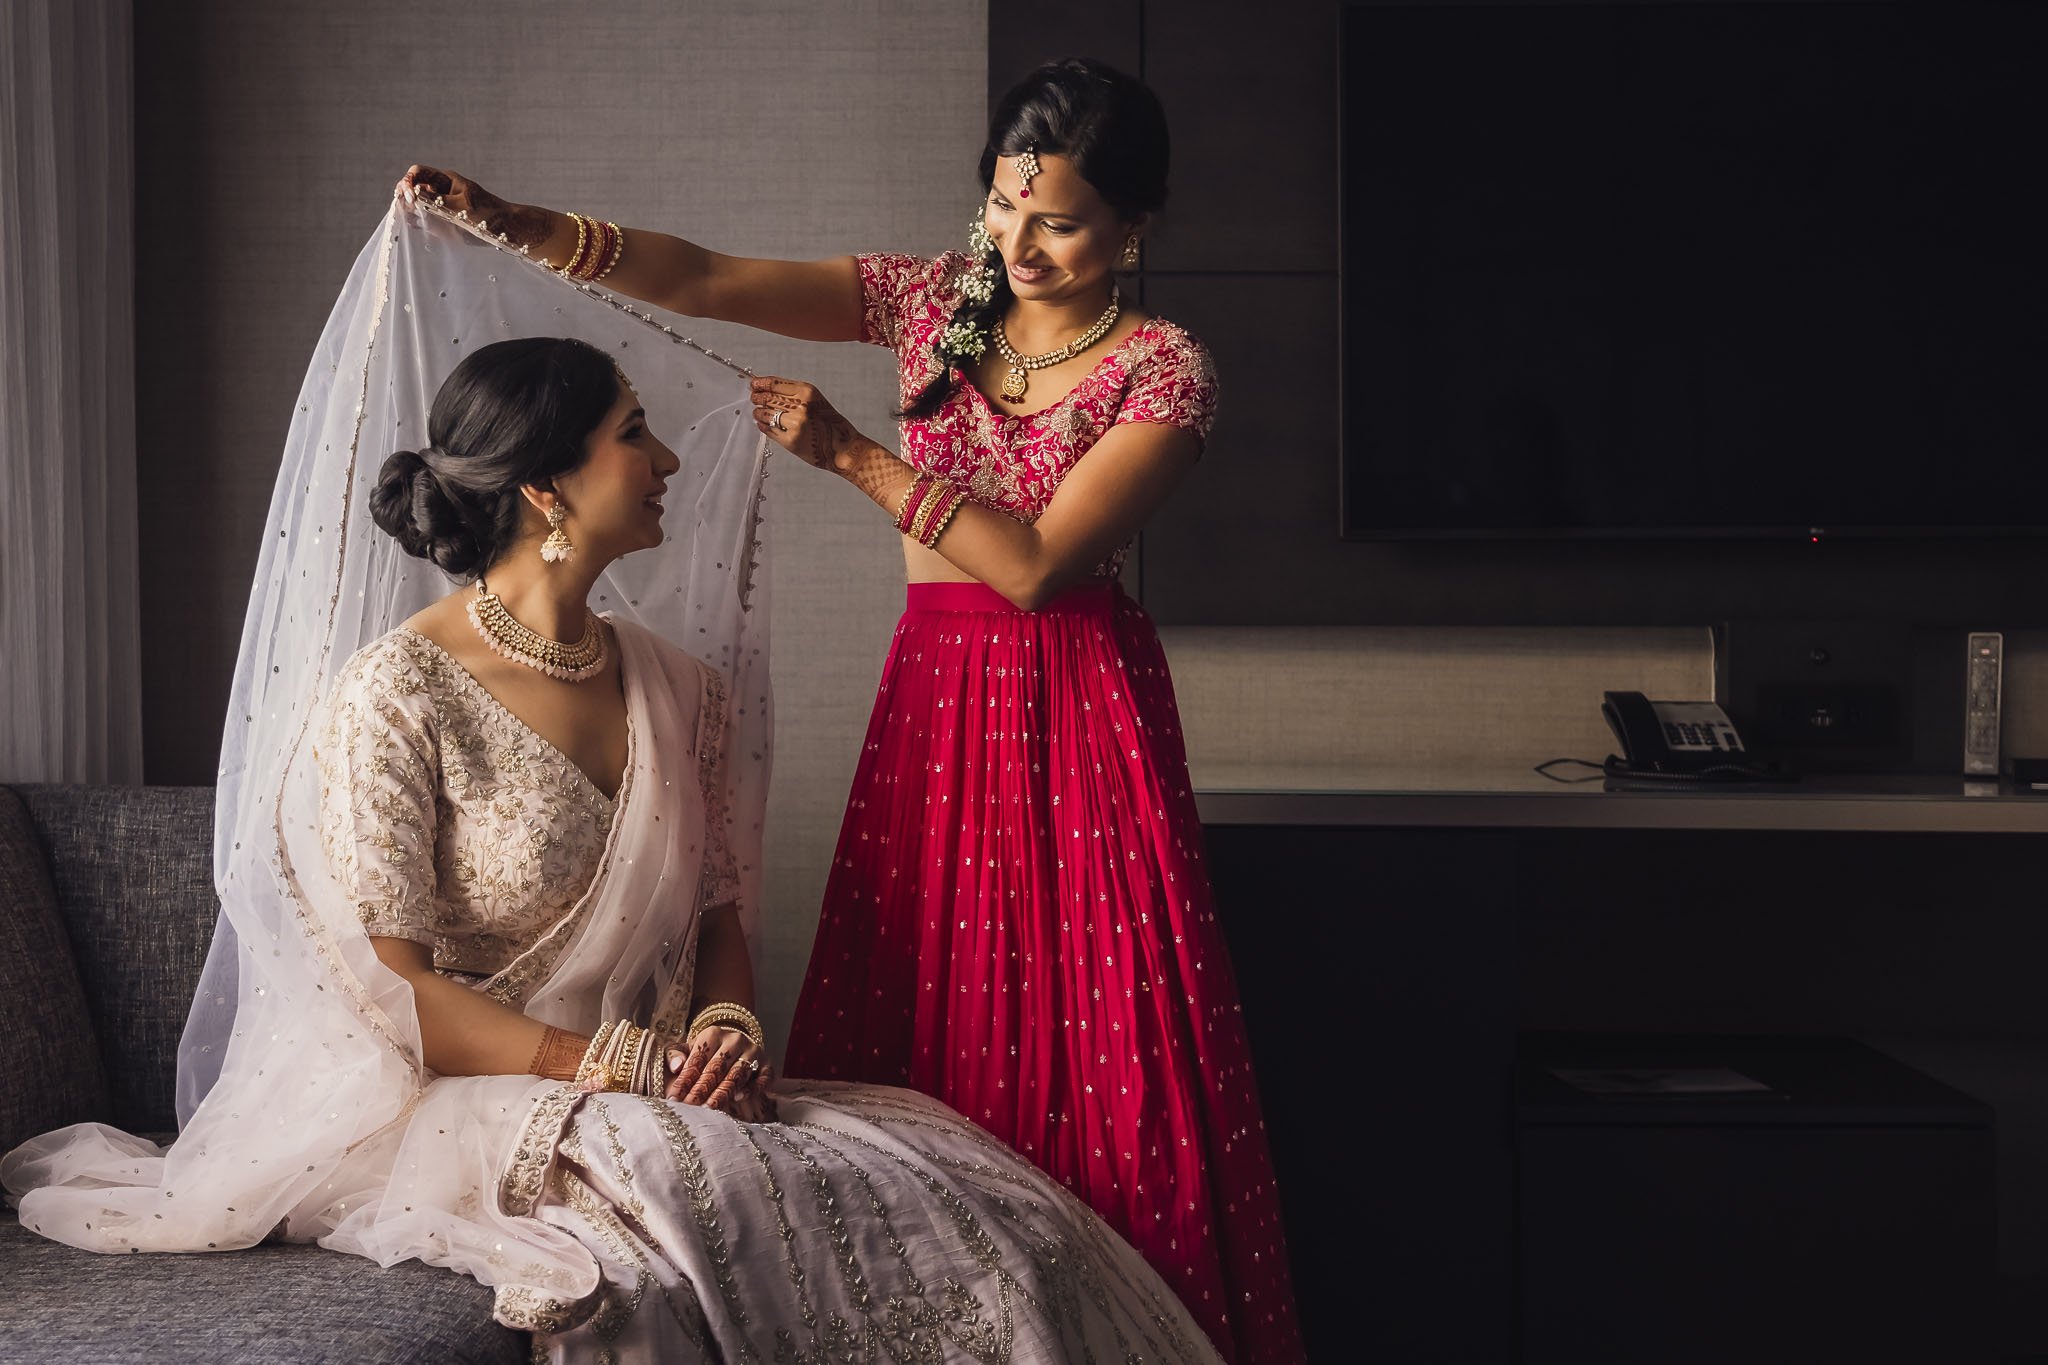 Putting a Dupatta on Indian bride